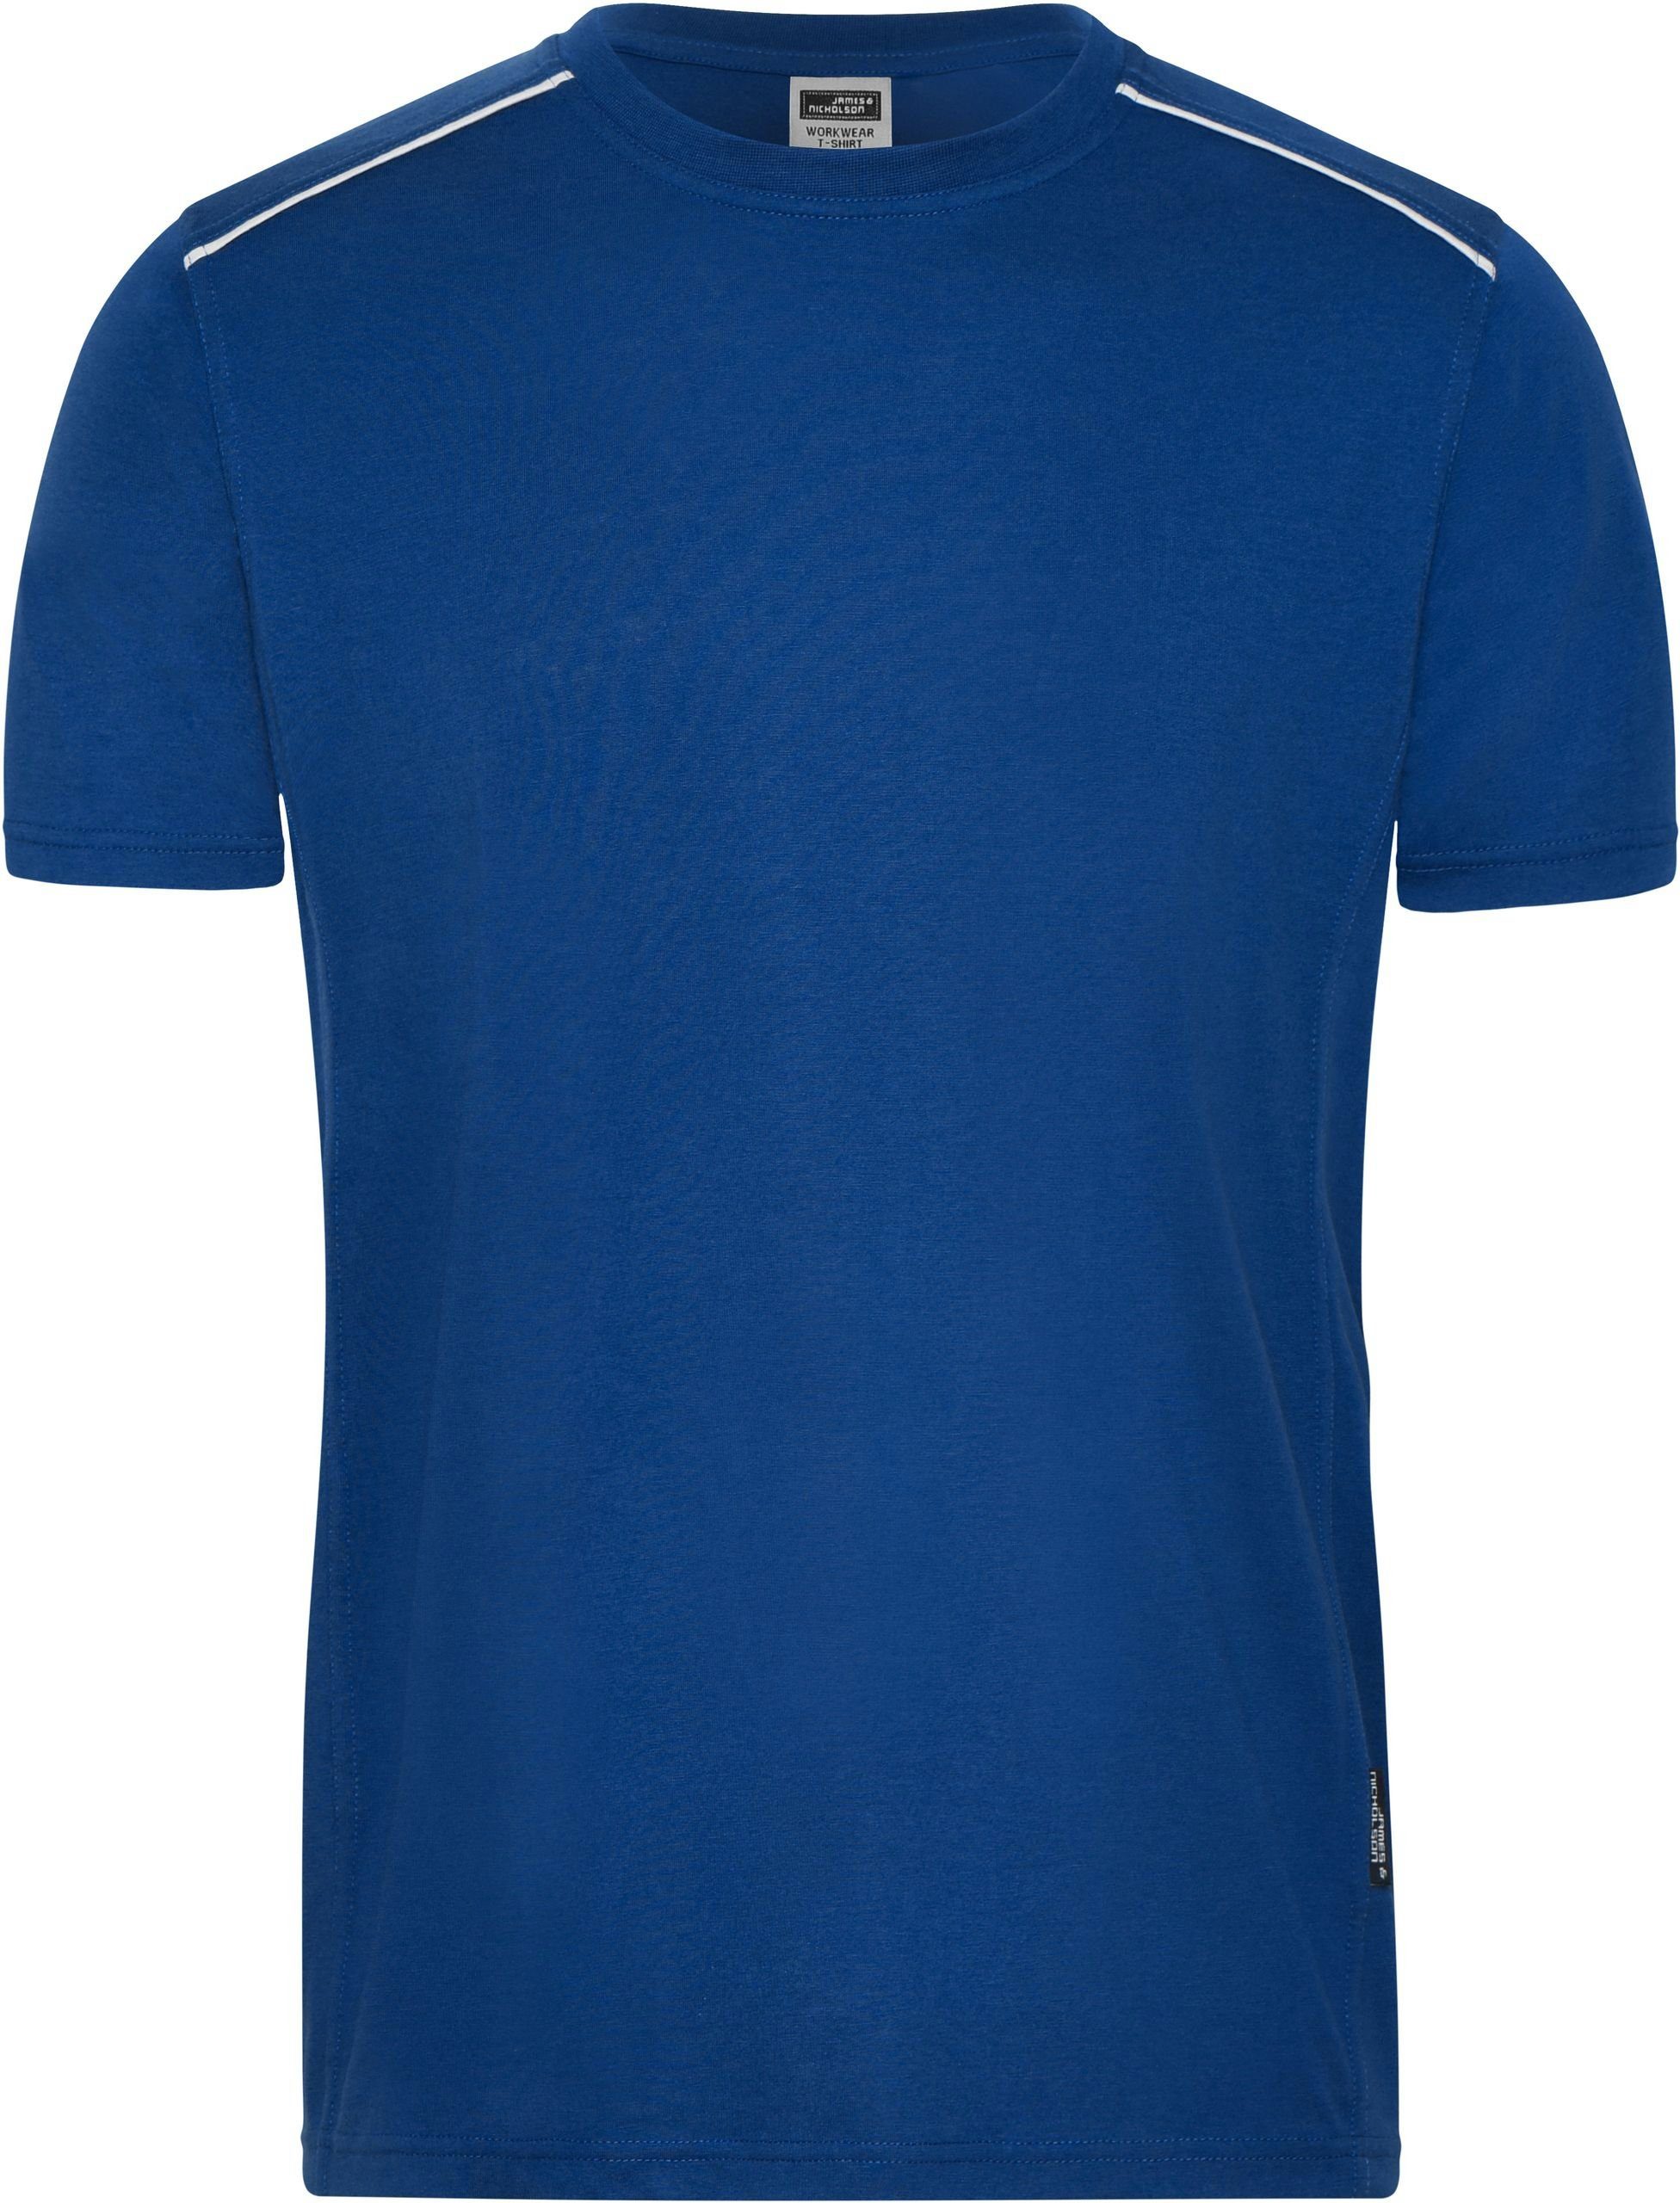 James & Nicholson Workwear Baumwolle FaS50890 T-Shirt Arbeits Navy -Solid- T-Shirt Bio